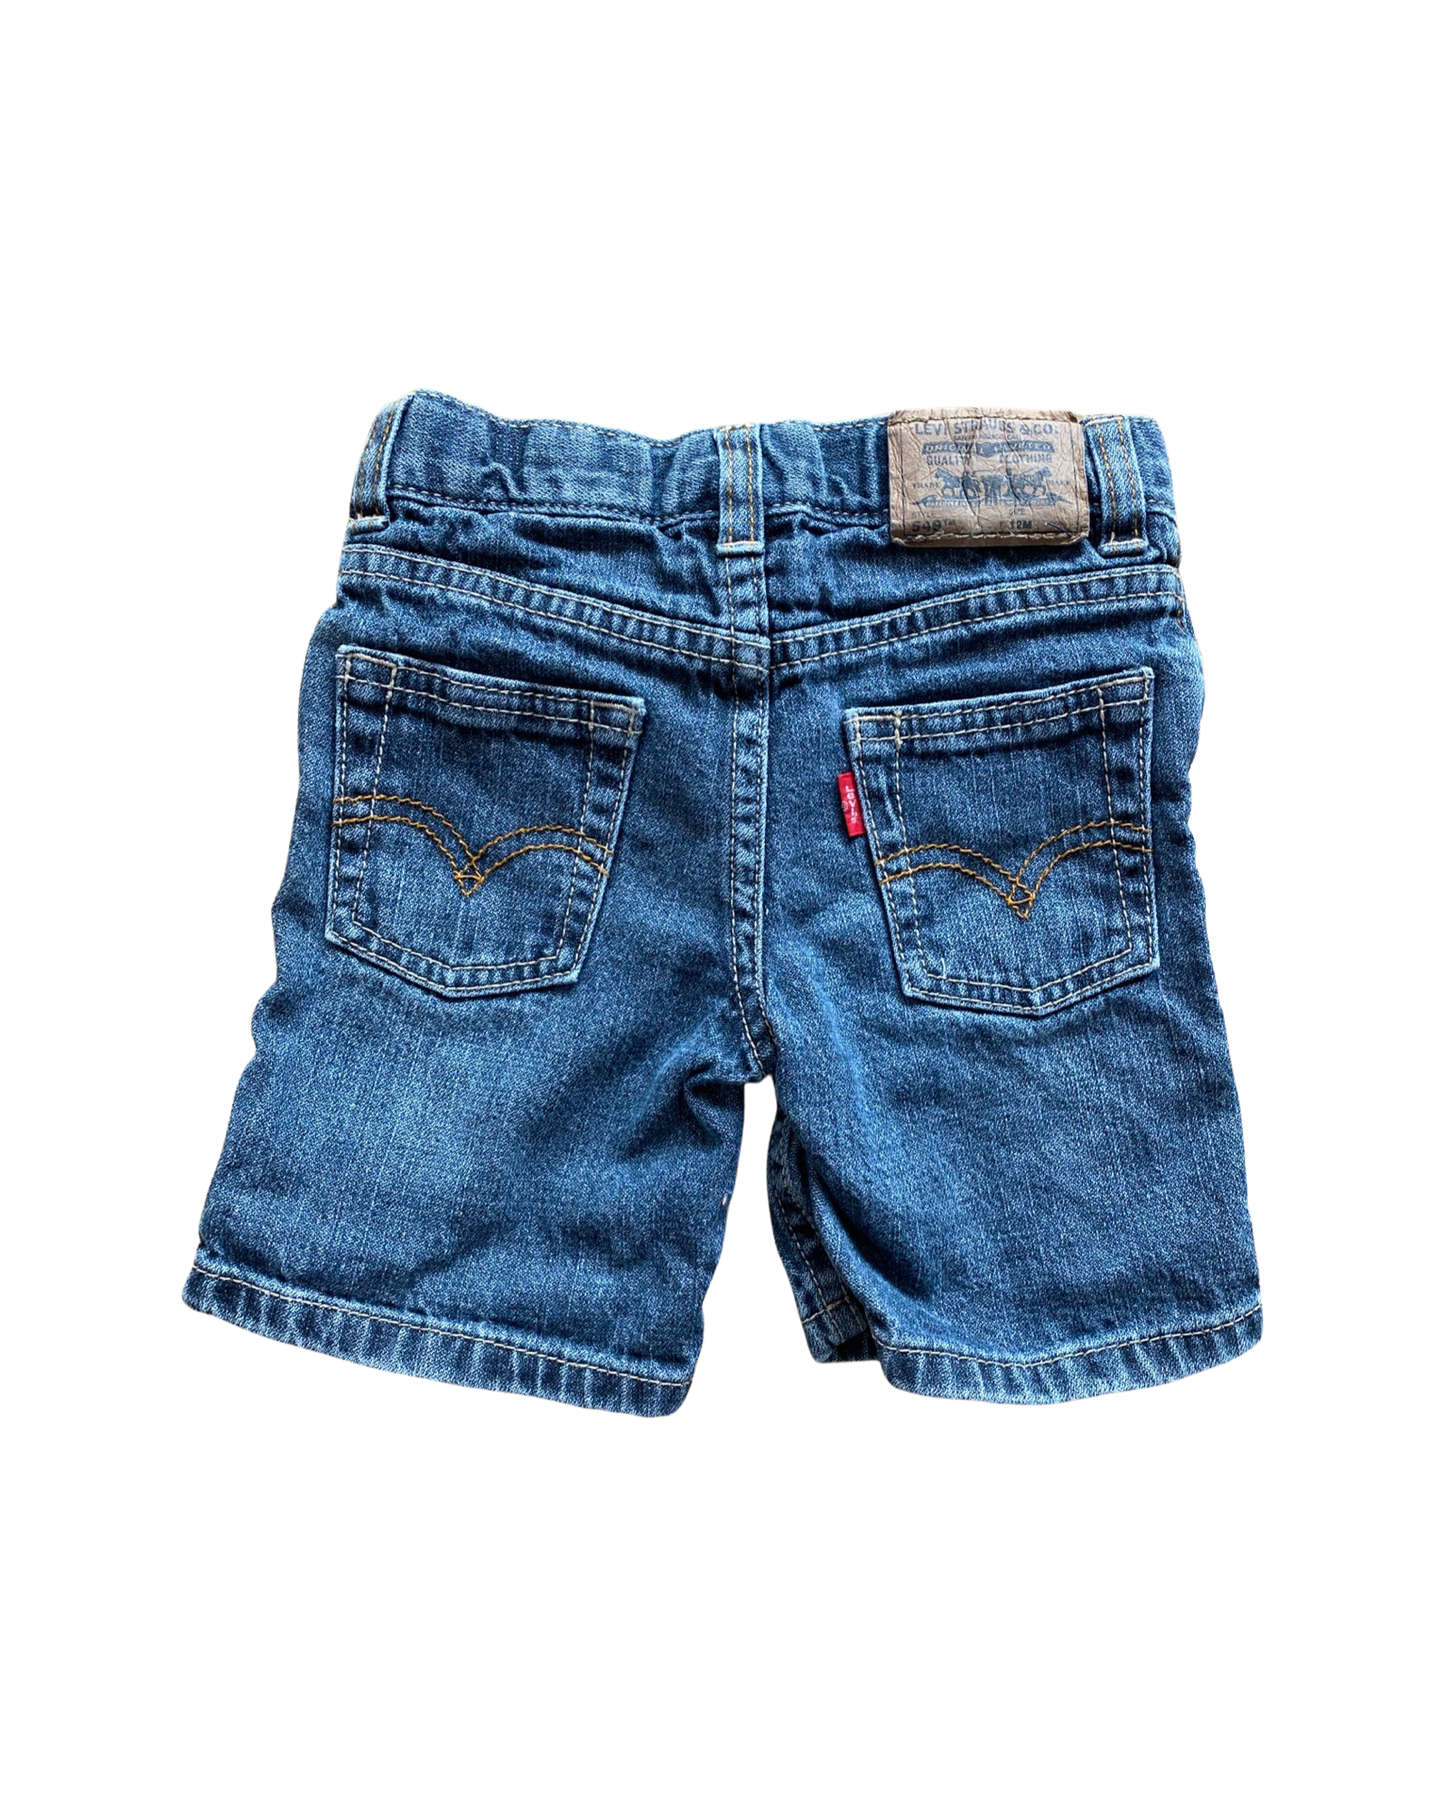 Levi's 549 dark vintage wash denim shorts (9-12mths)